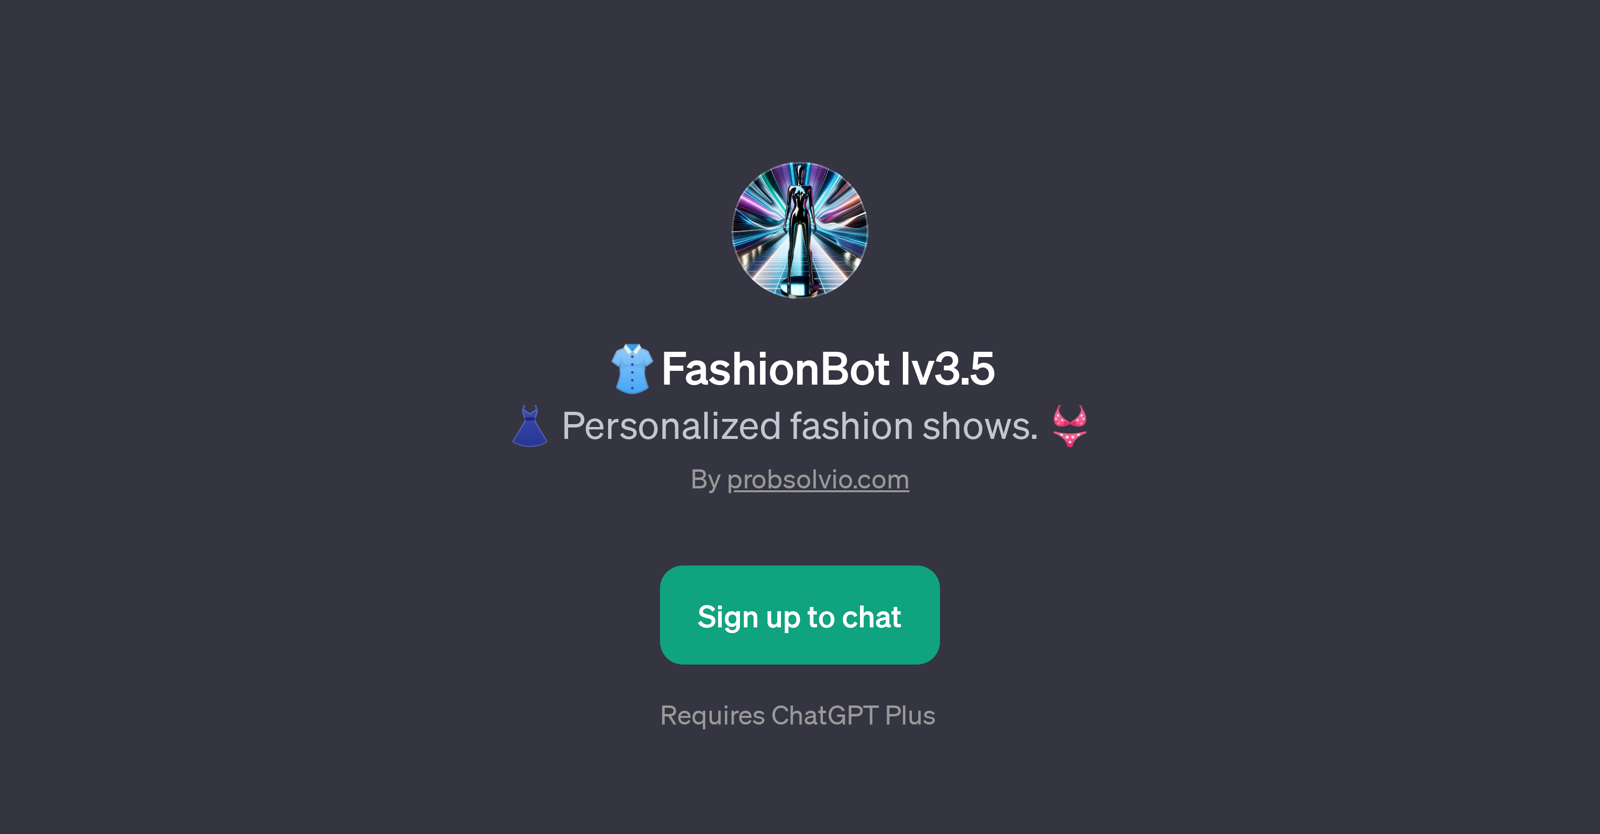 FashionBot lv3.5 website